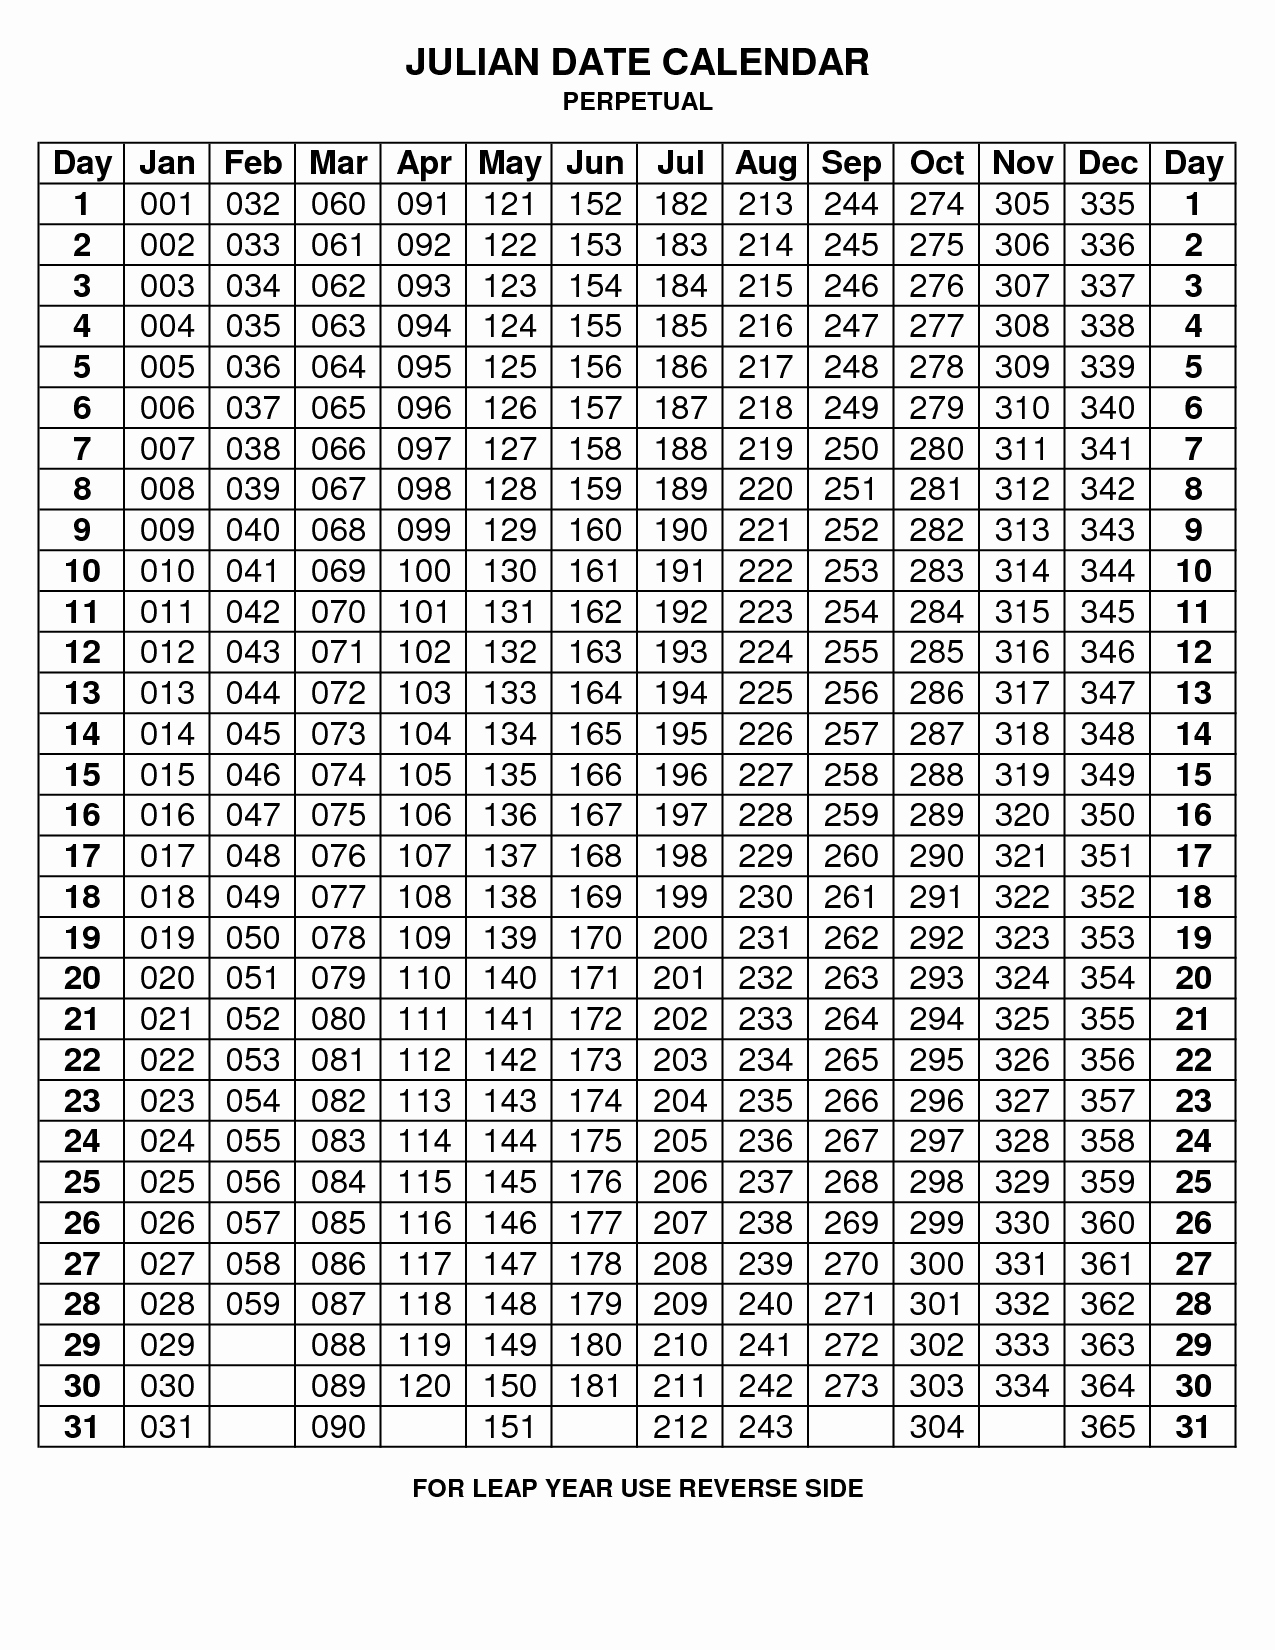 Depo Provera Perpetual Calendar To Print - Calendar  2021 Depo Calendar